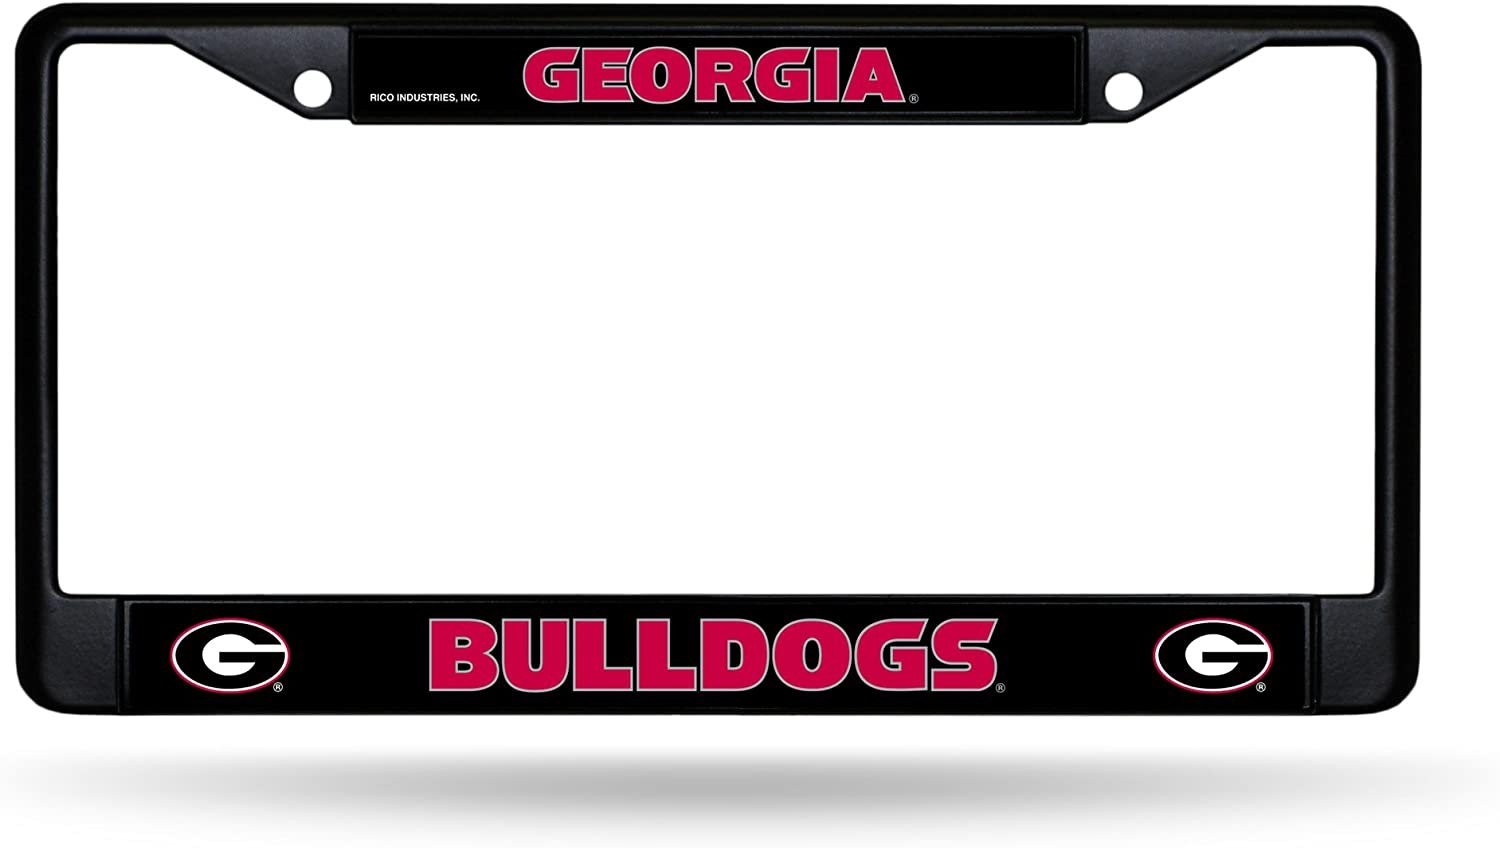 University of Georgia Bulldogs Black Metal License License Plate Frame Chrome Tag Cover, 12x6 Inch